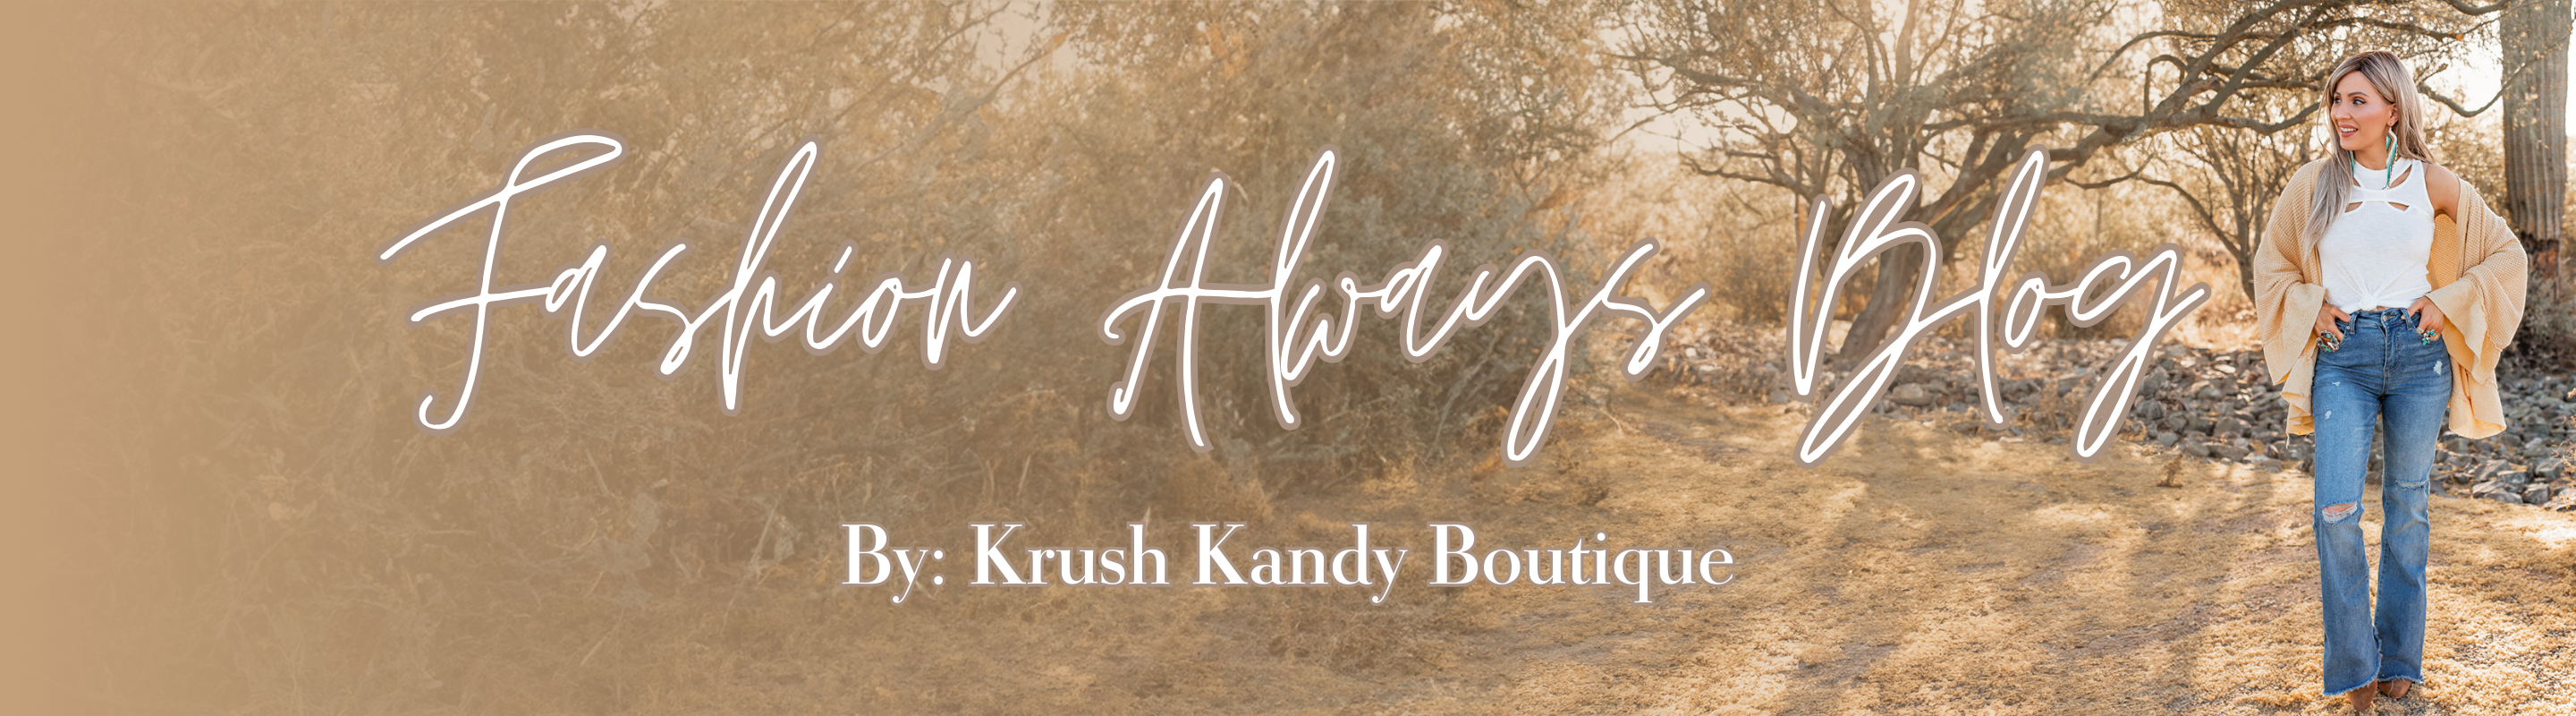 Fashion Always Blog | Krush Kandy Boutique